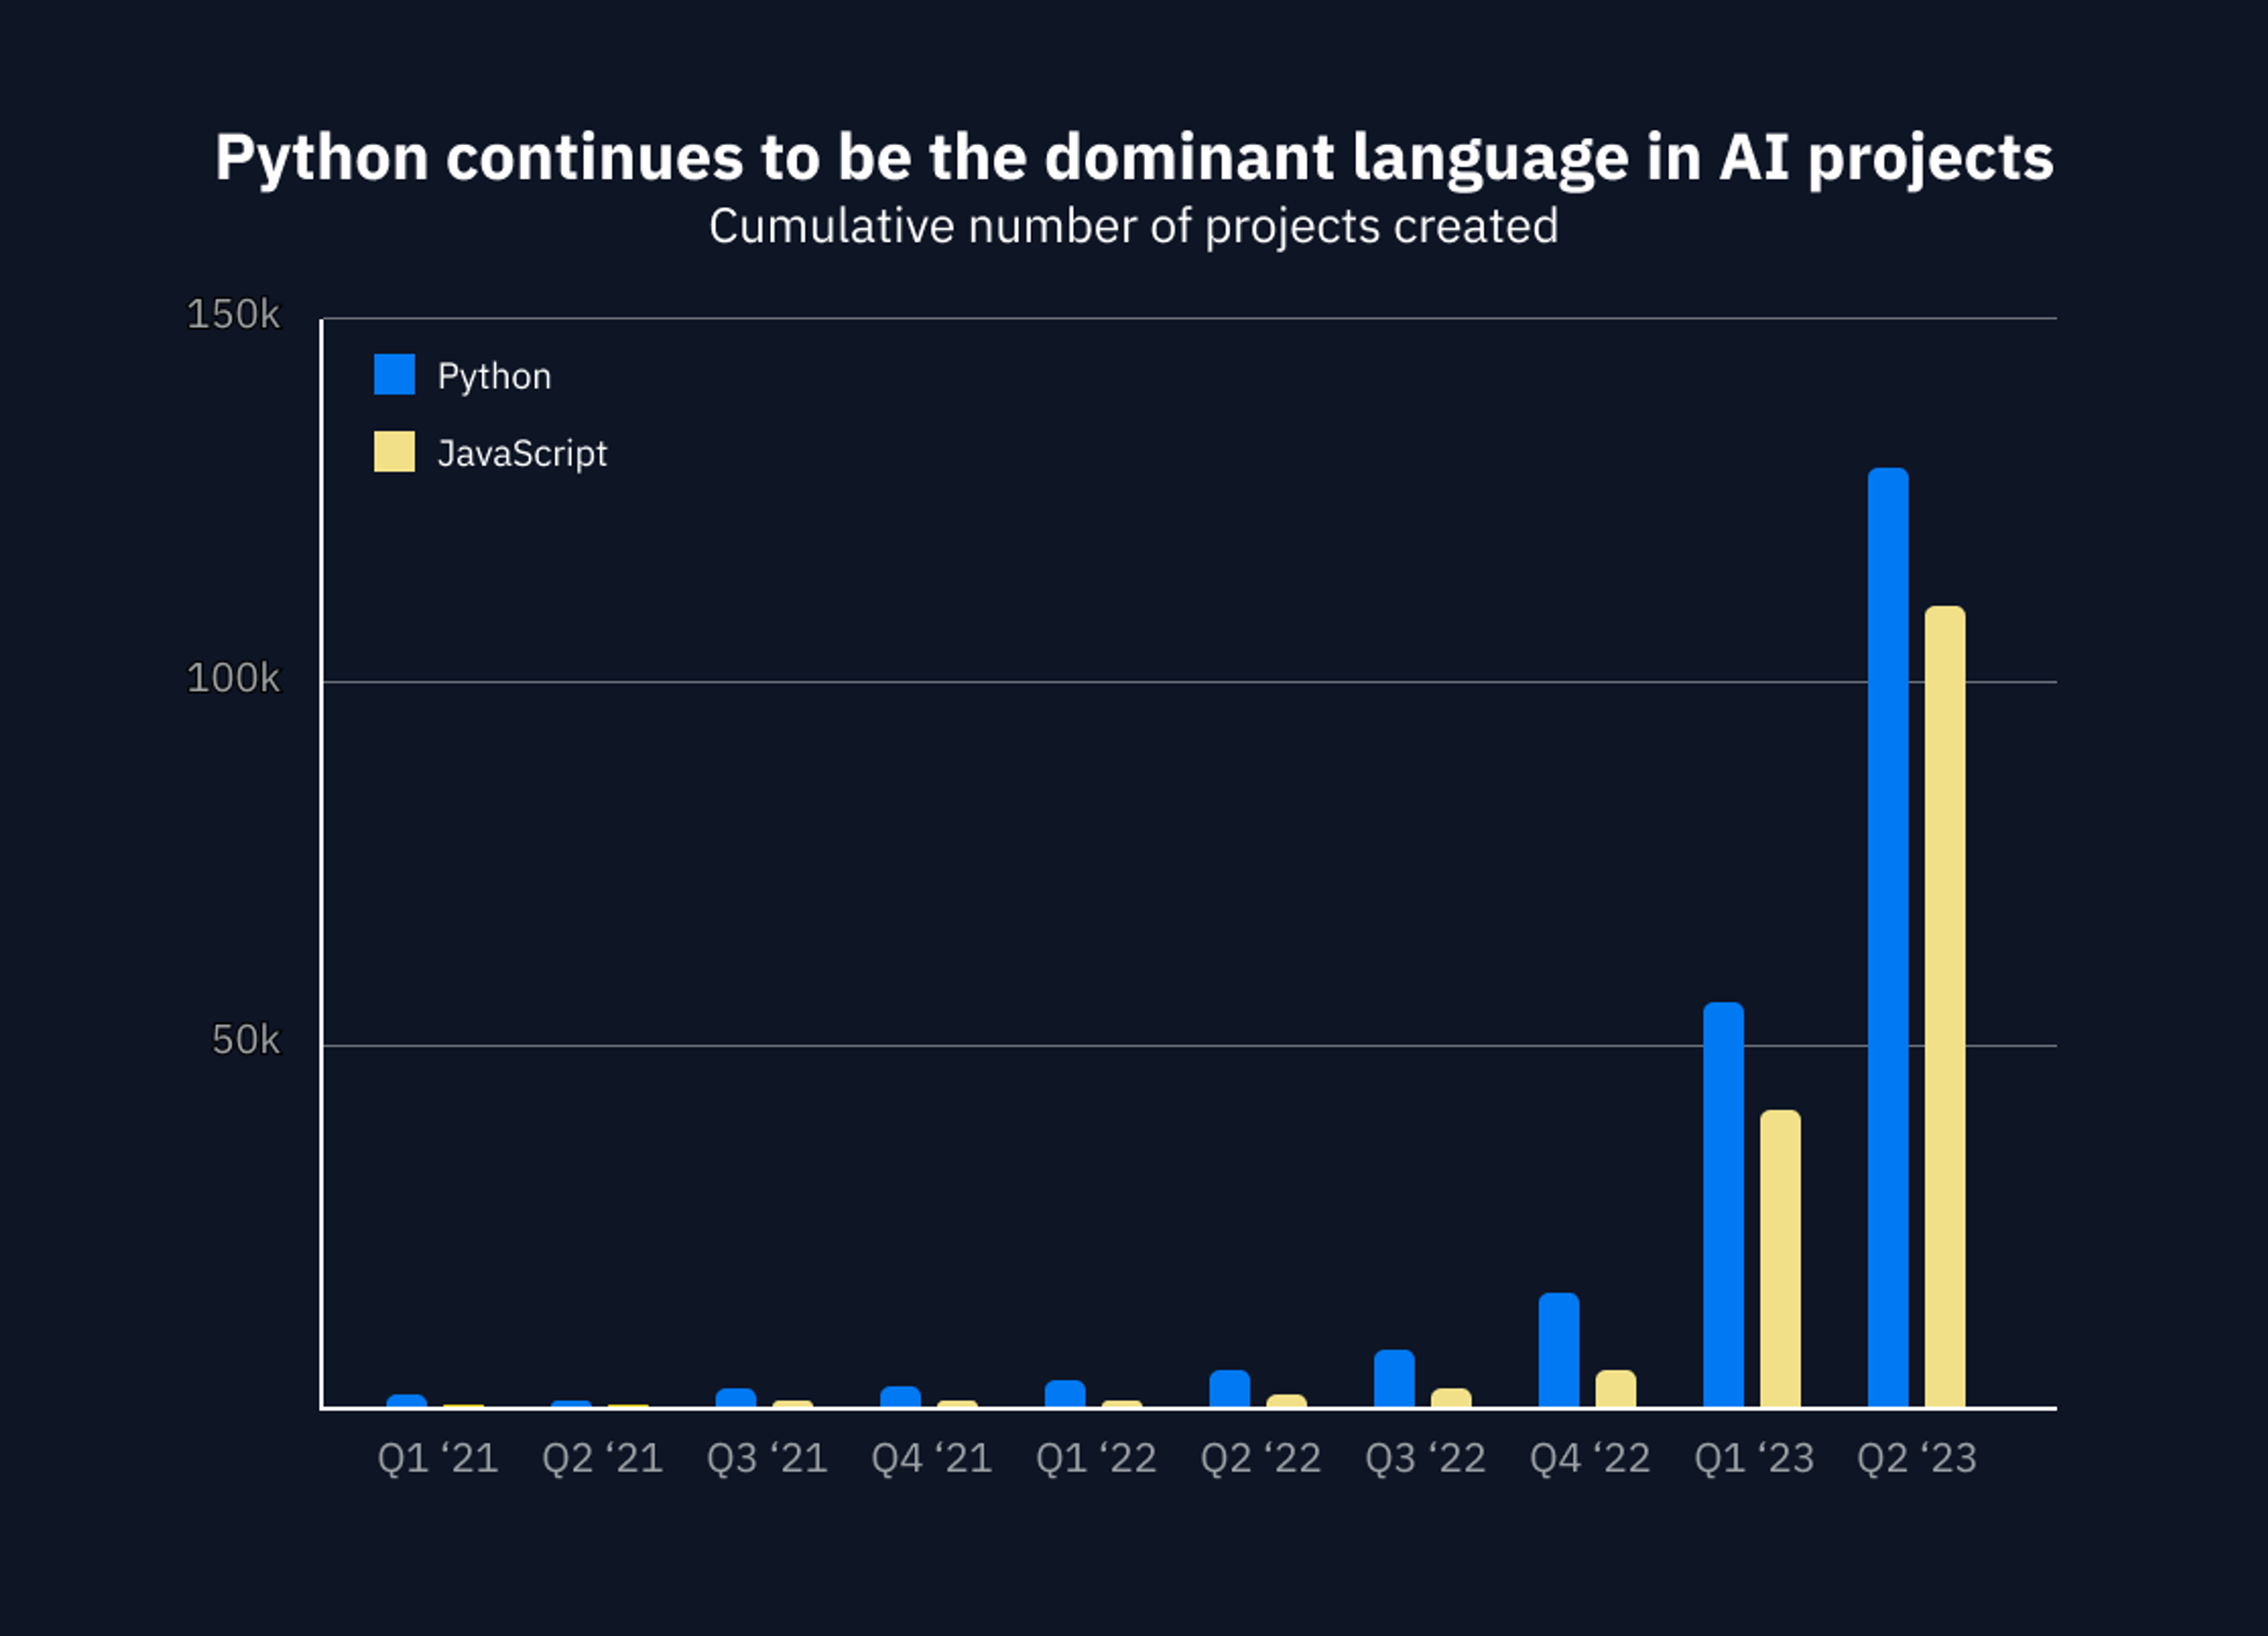 Python vs. JavaScript